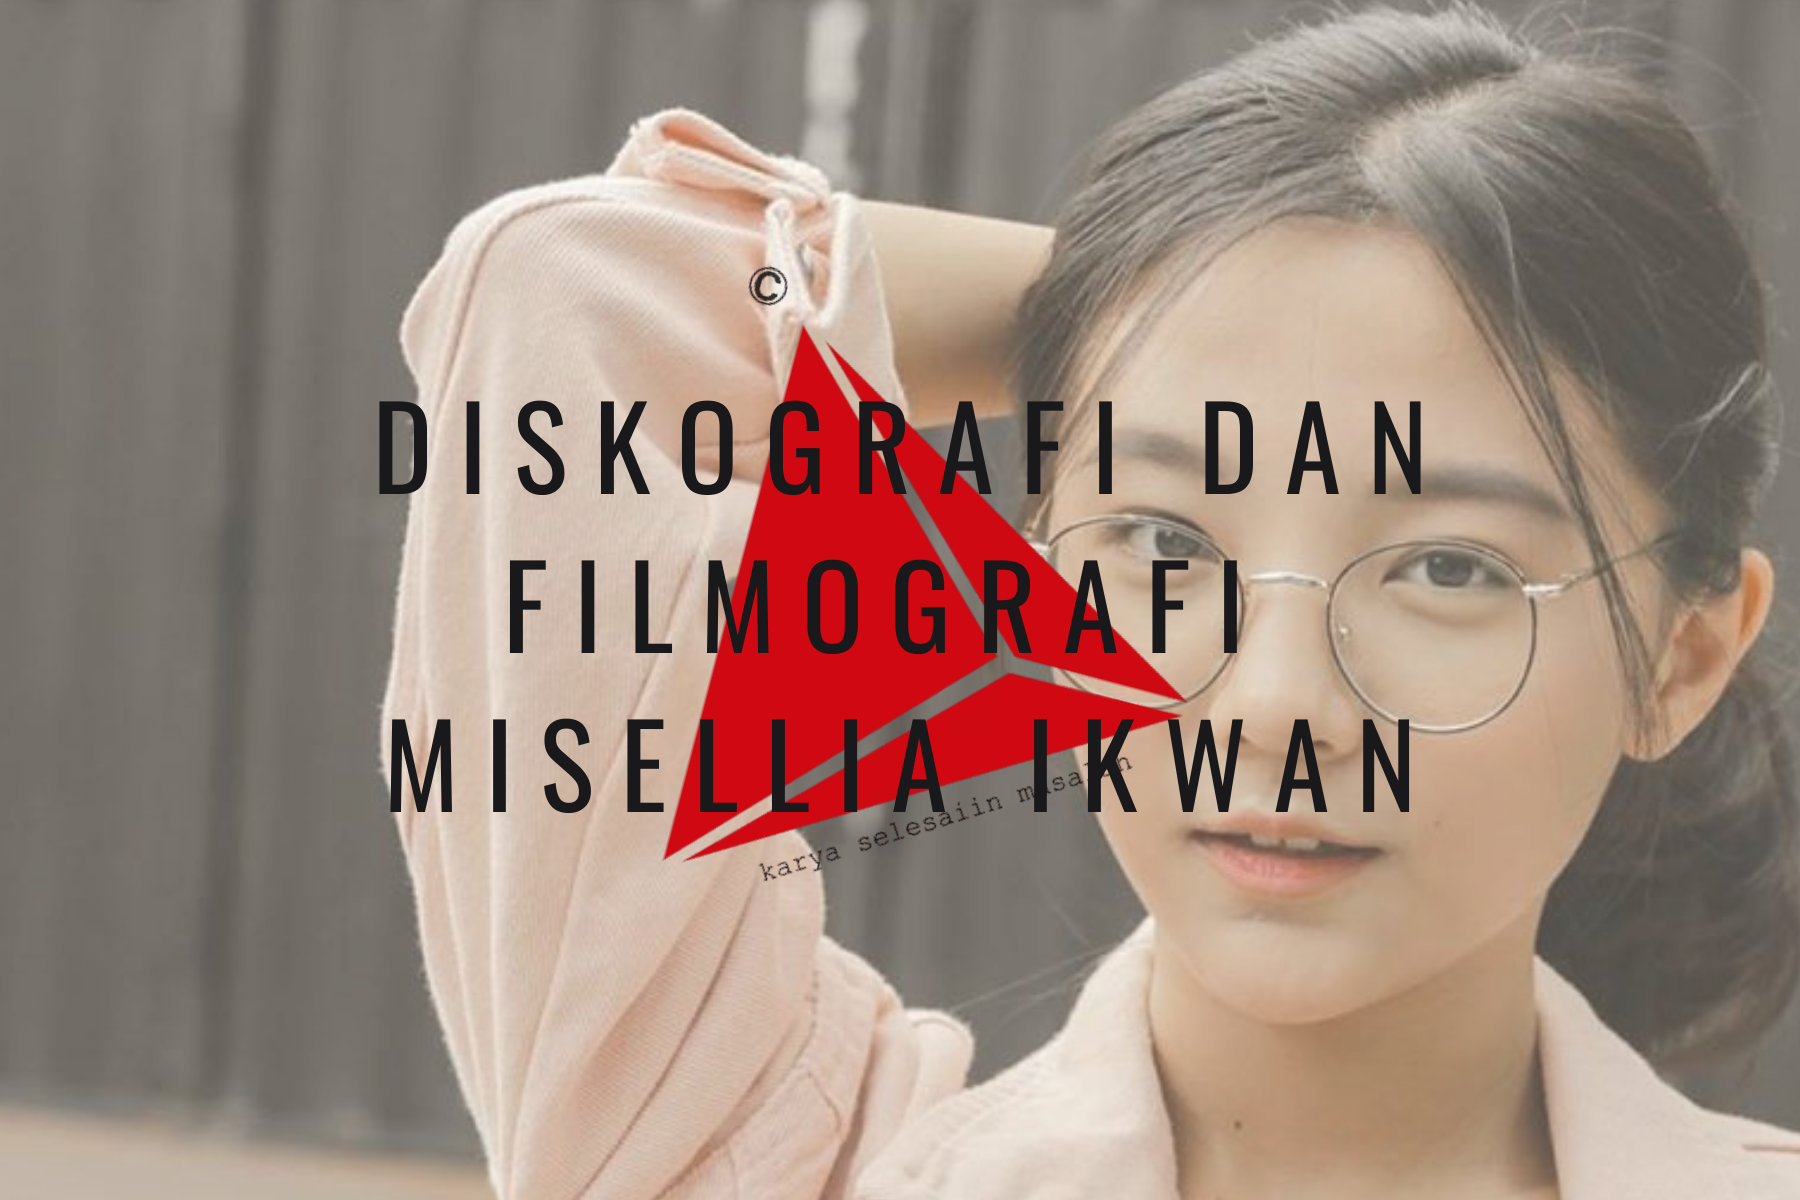 Diskografi dan Filmografi Misellia Ikwan